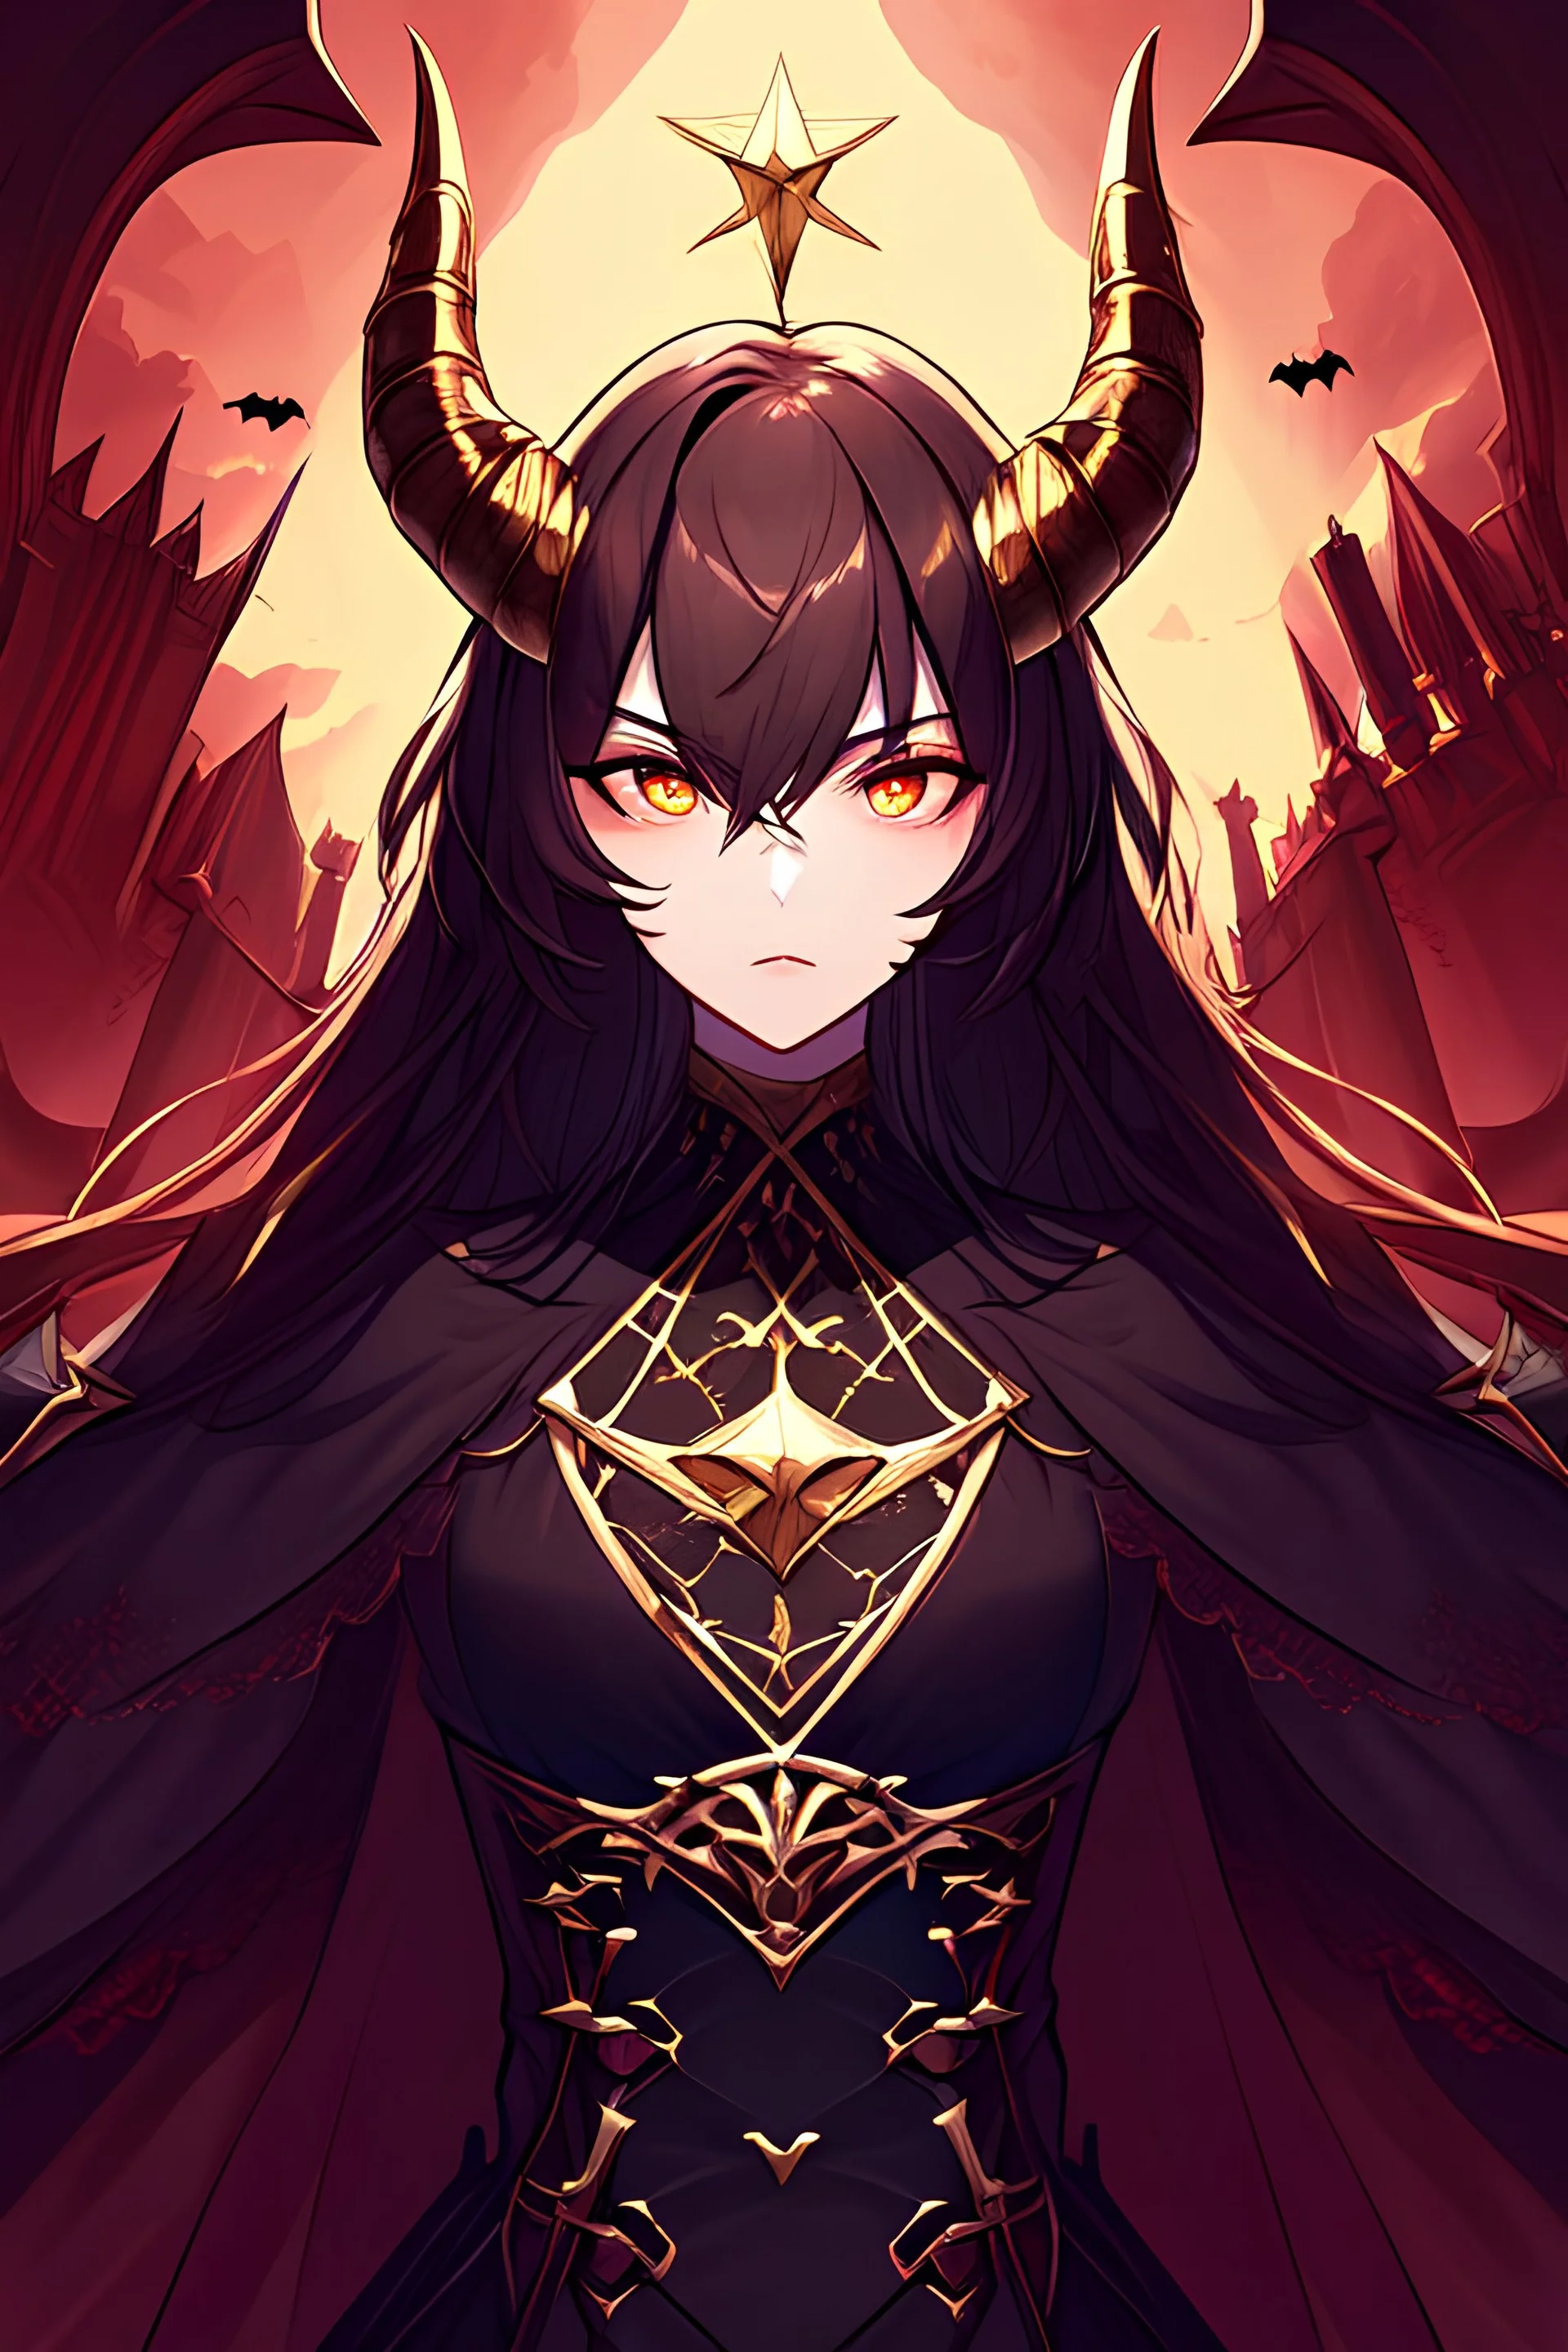 Possessed, vampire queen, front facing, dark, gold horns, dark castle background